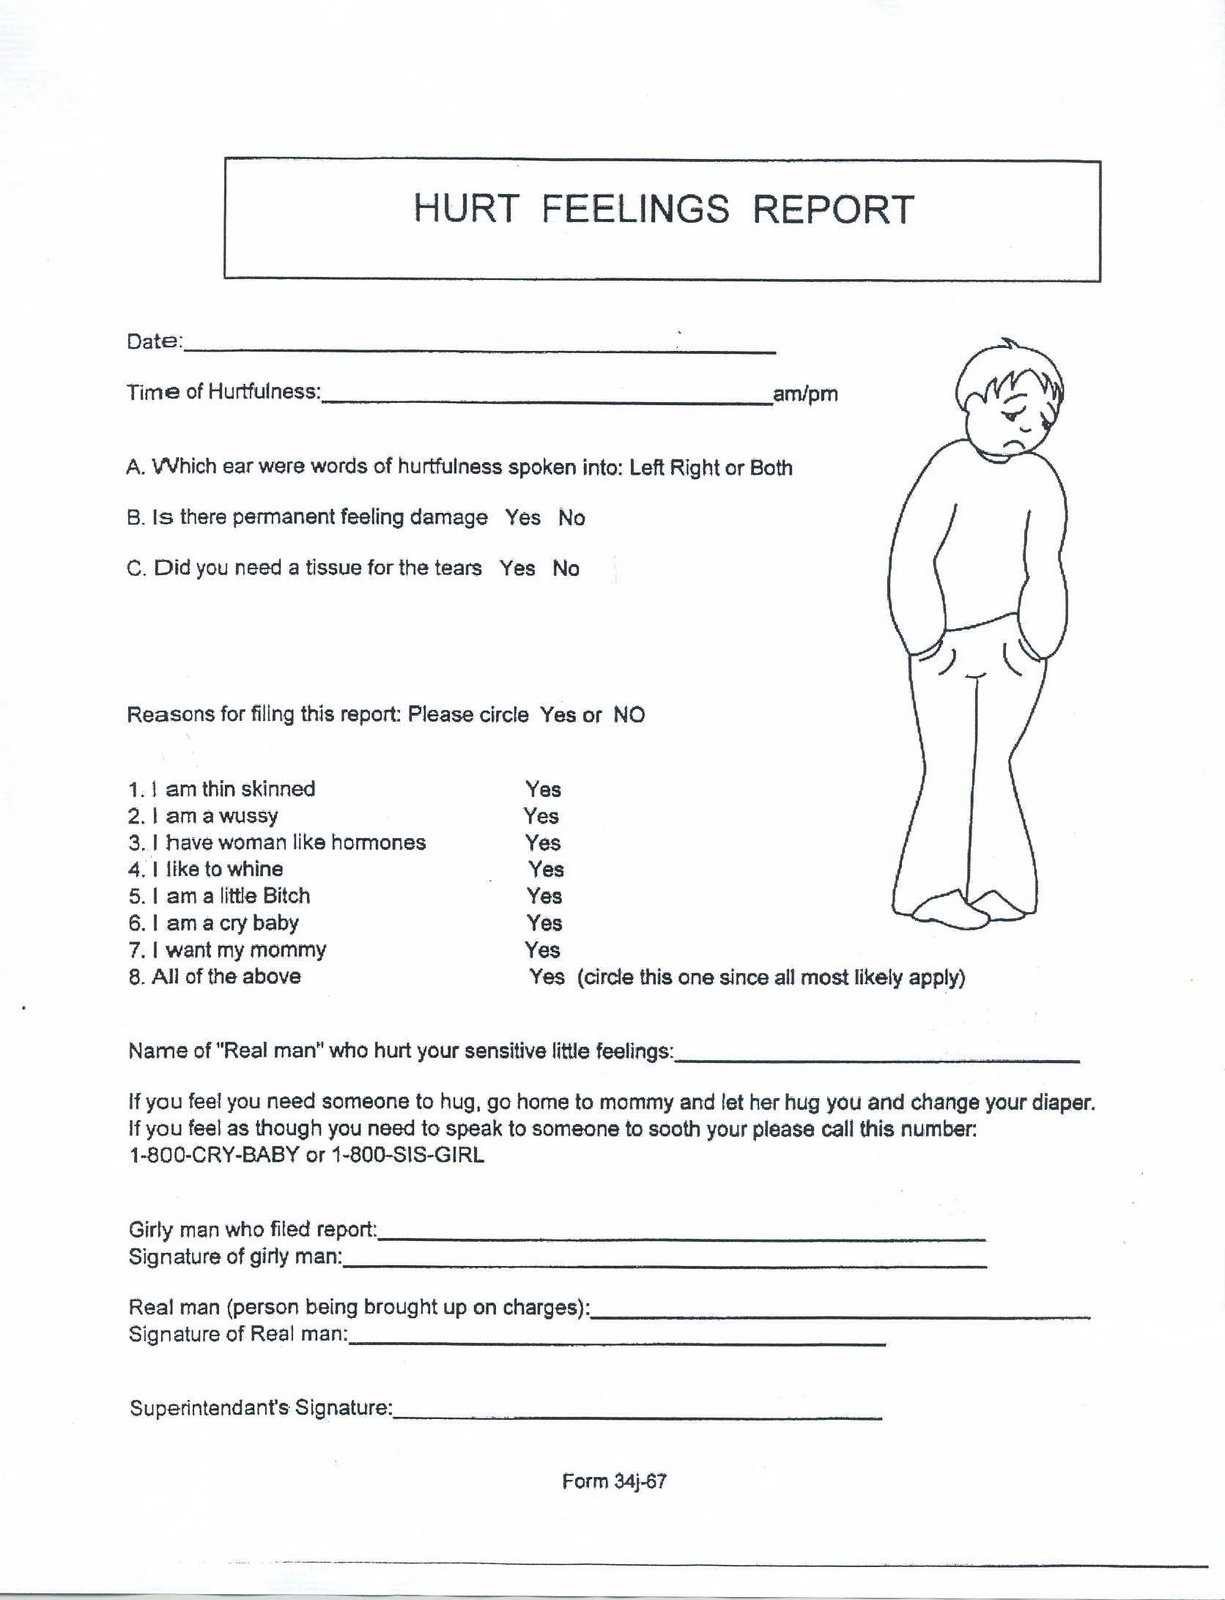 hurt-feelings-report-template-best-professional-templates